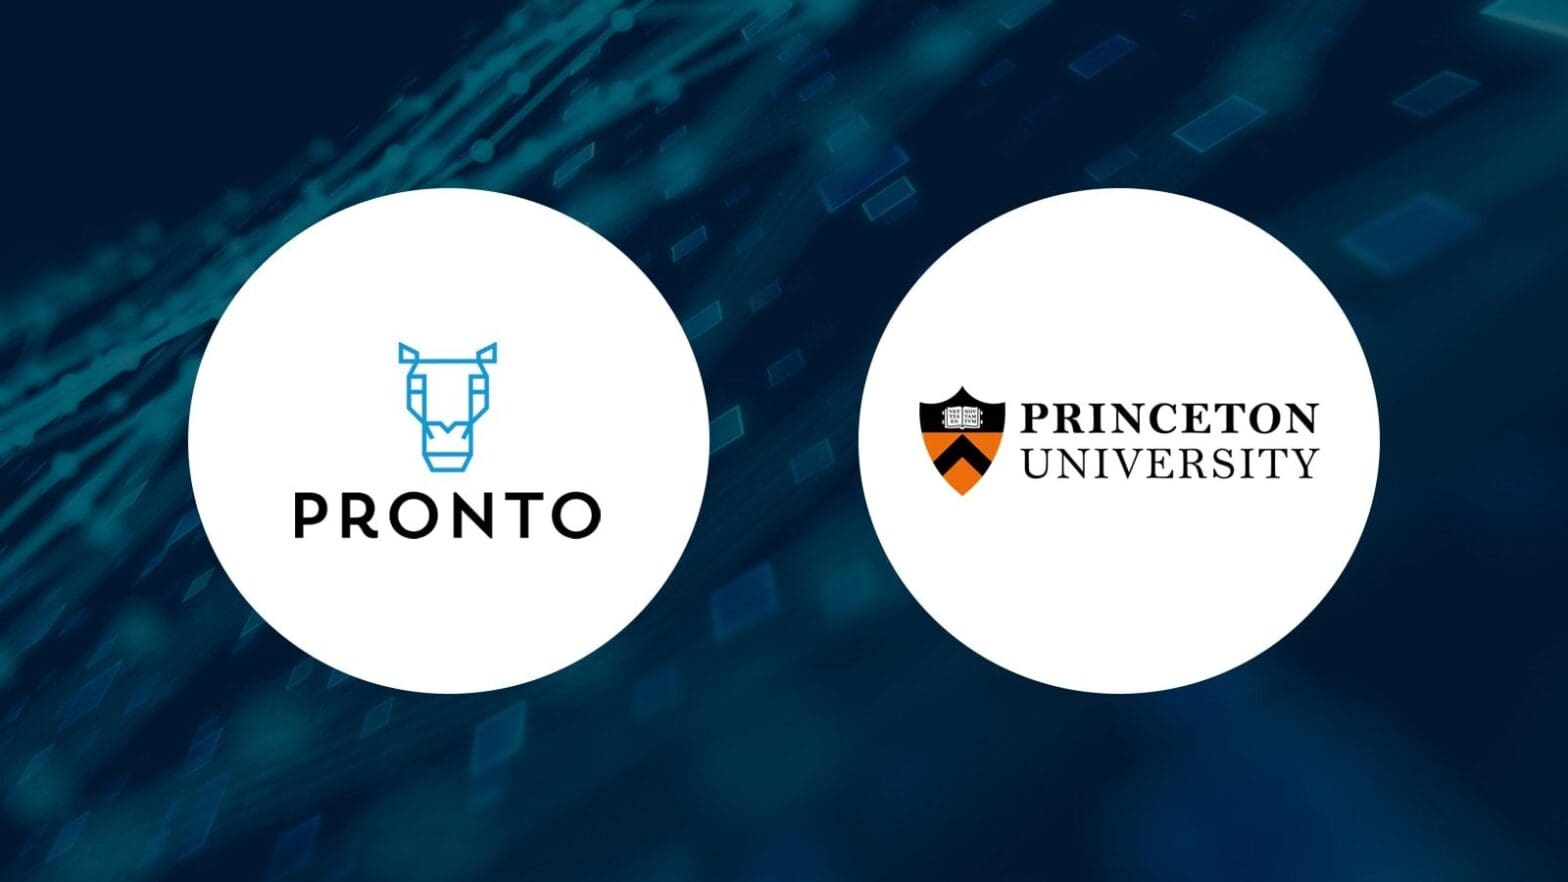 Logos of Project Pronto and Princeton University